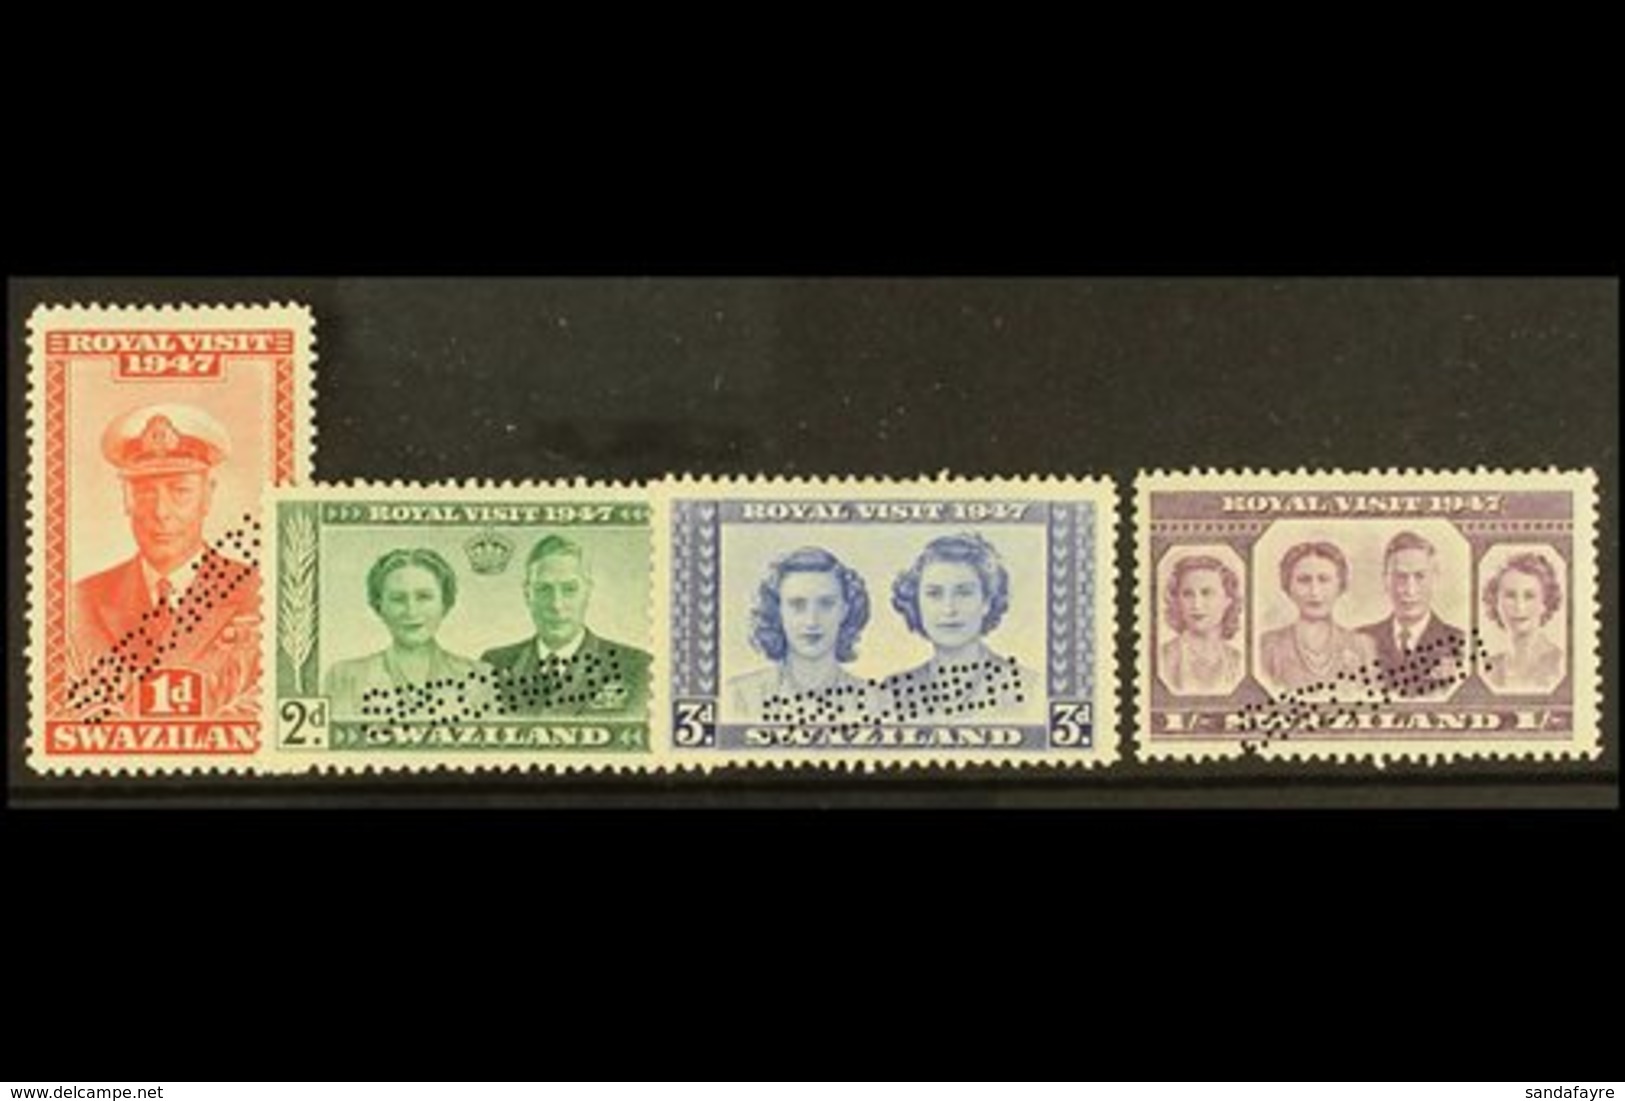 1947 Royal Visit Set Perforated "Specimen", SG 42s/45s, Very Fine Mint, Large Part Og. (4 Stamps) For More Images, Pleas - Swaziland (...-1967)